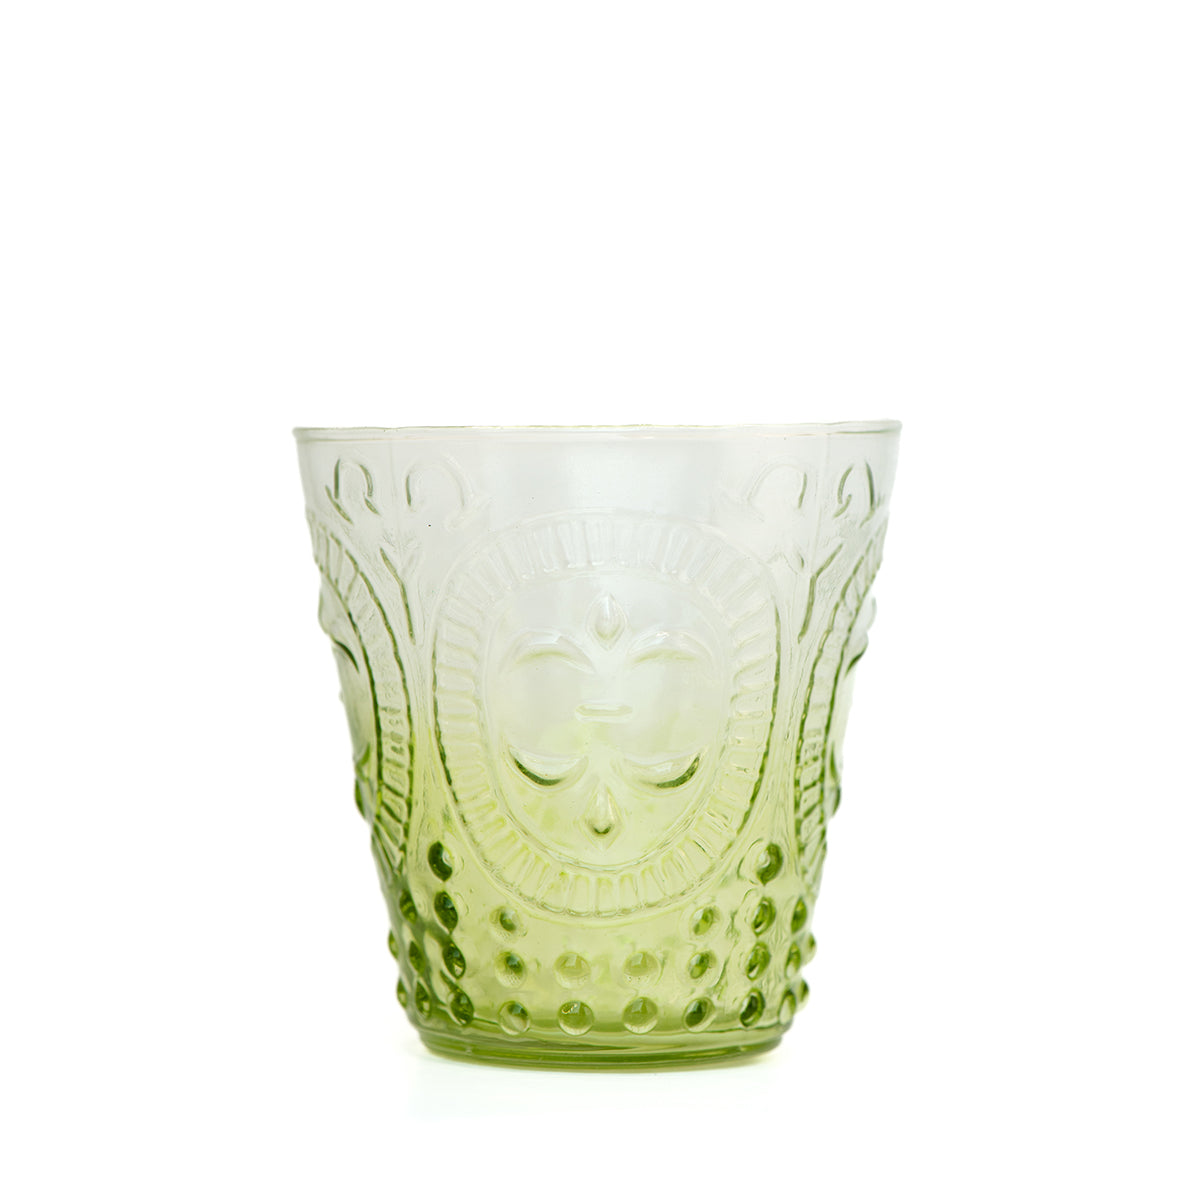 Fleur De Lil Water Glasses | Green Ombre | Set of 4 Glasses